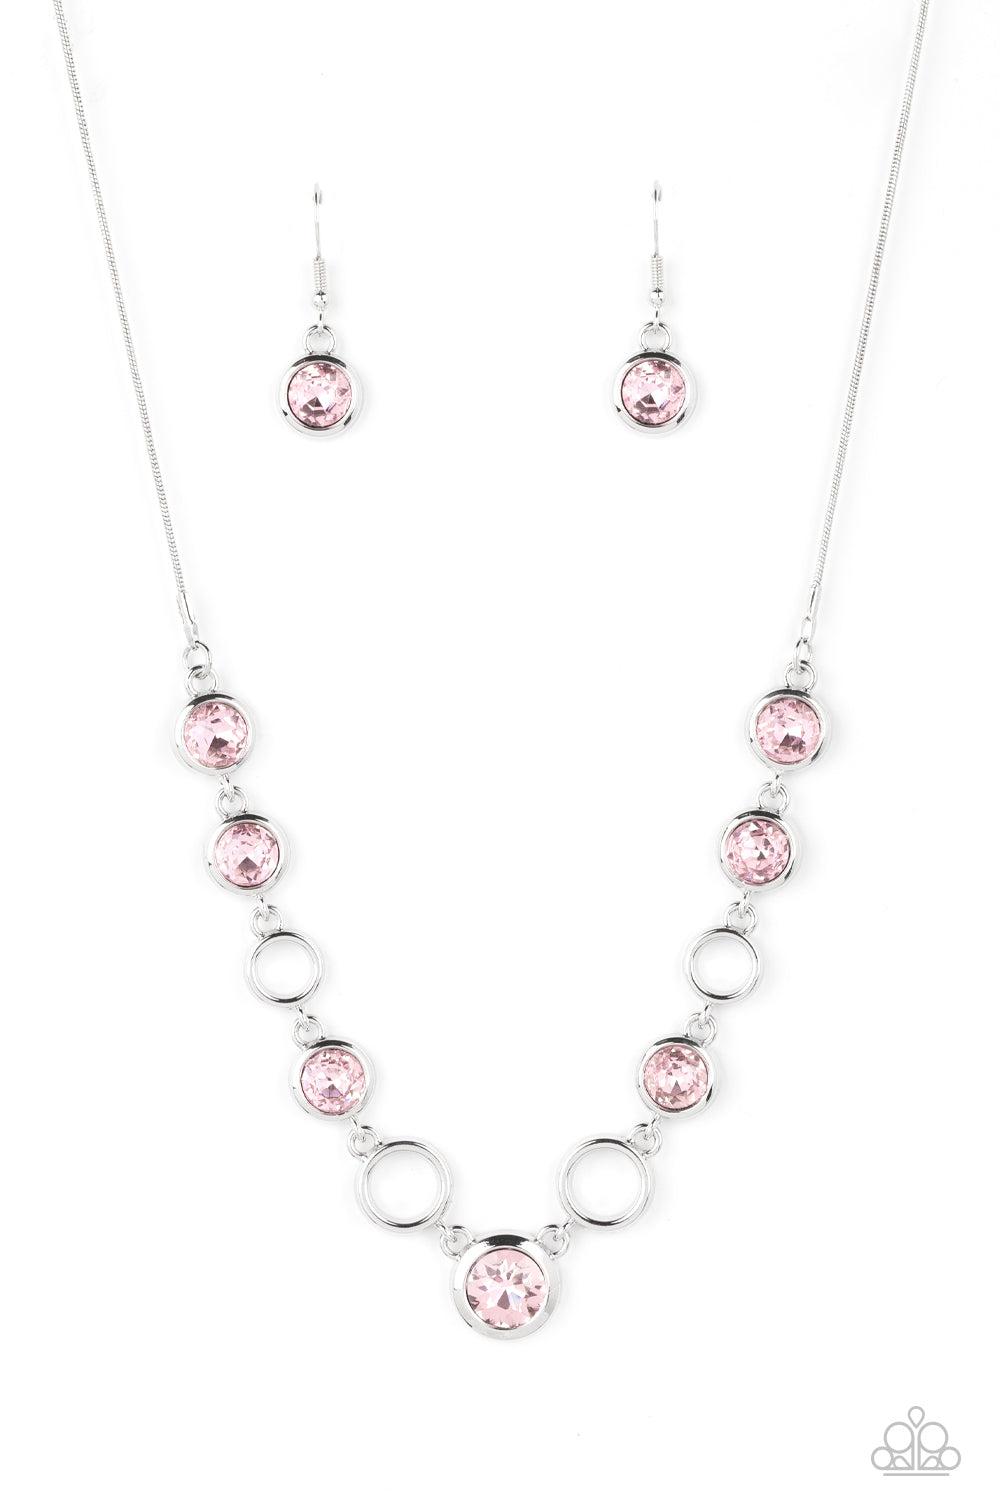 Elegantly Elite Pink Rhinestone Necklace - Paparazzi Accessories- lightbox - CarasShop.com - $5 Jewelry by Cara Jewels